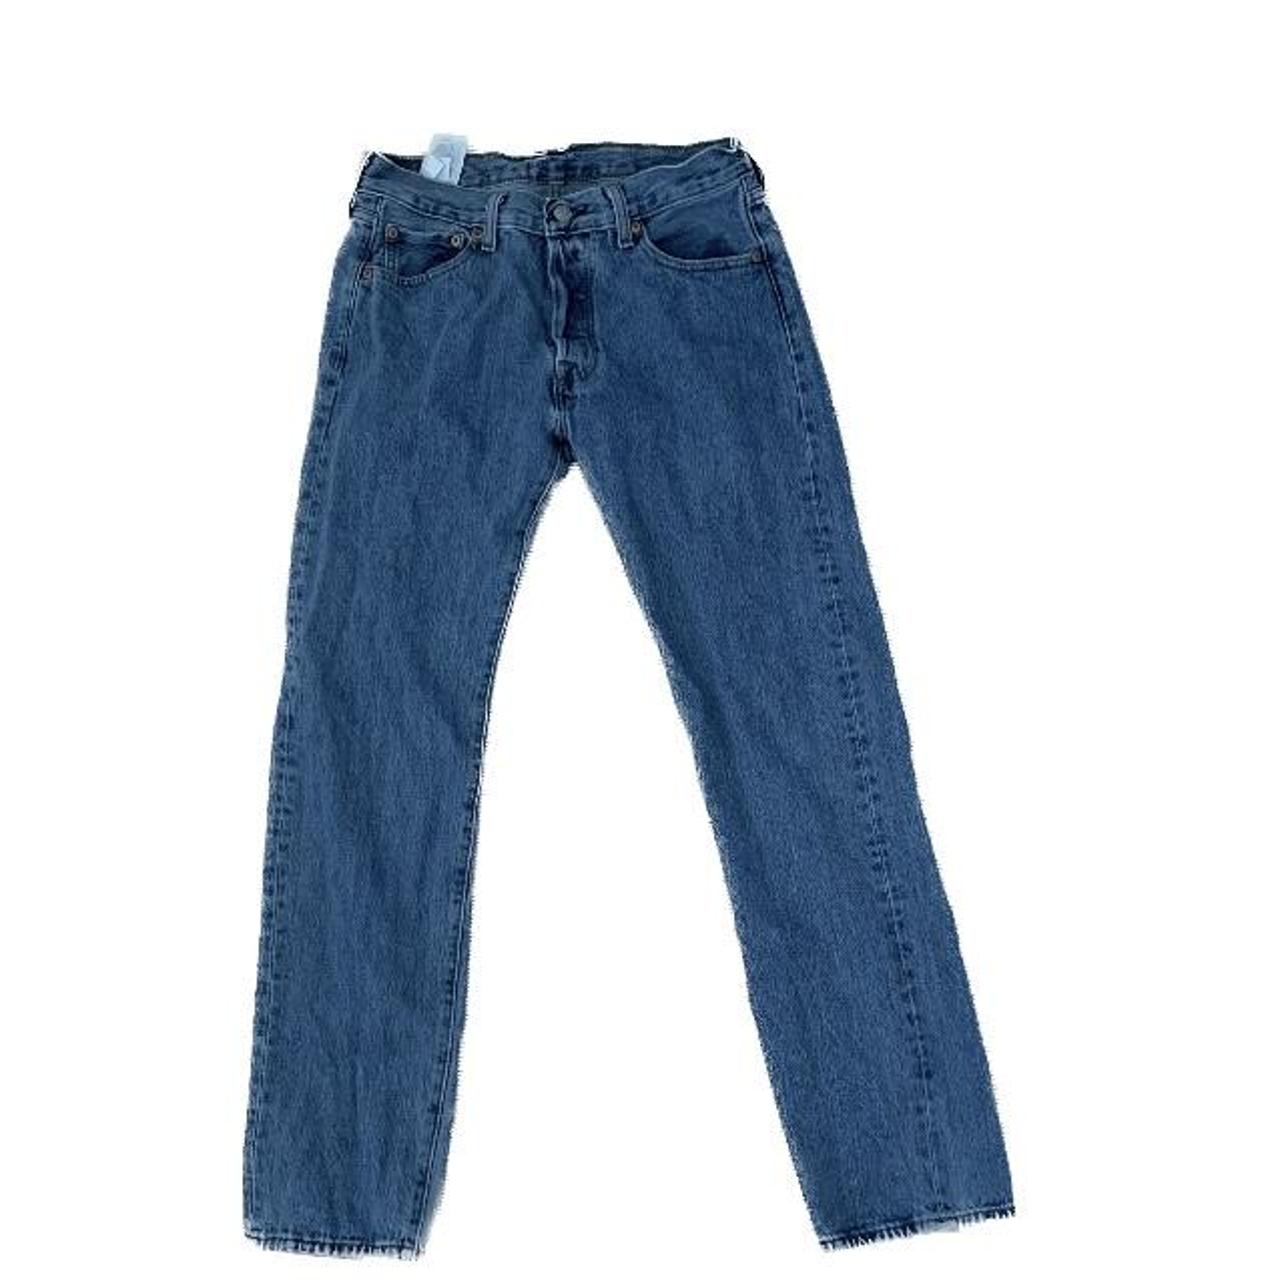 Navy blue Levi 501 straight leg denim jeans, Perfect... - Depop